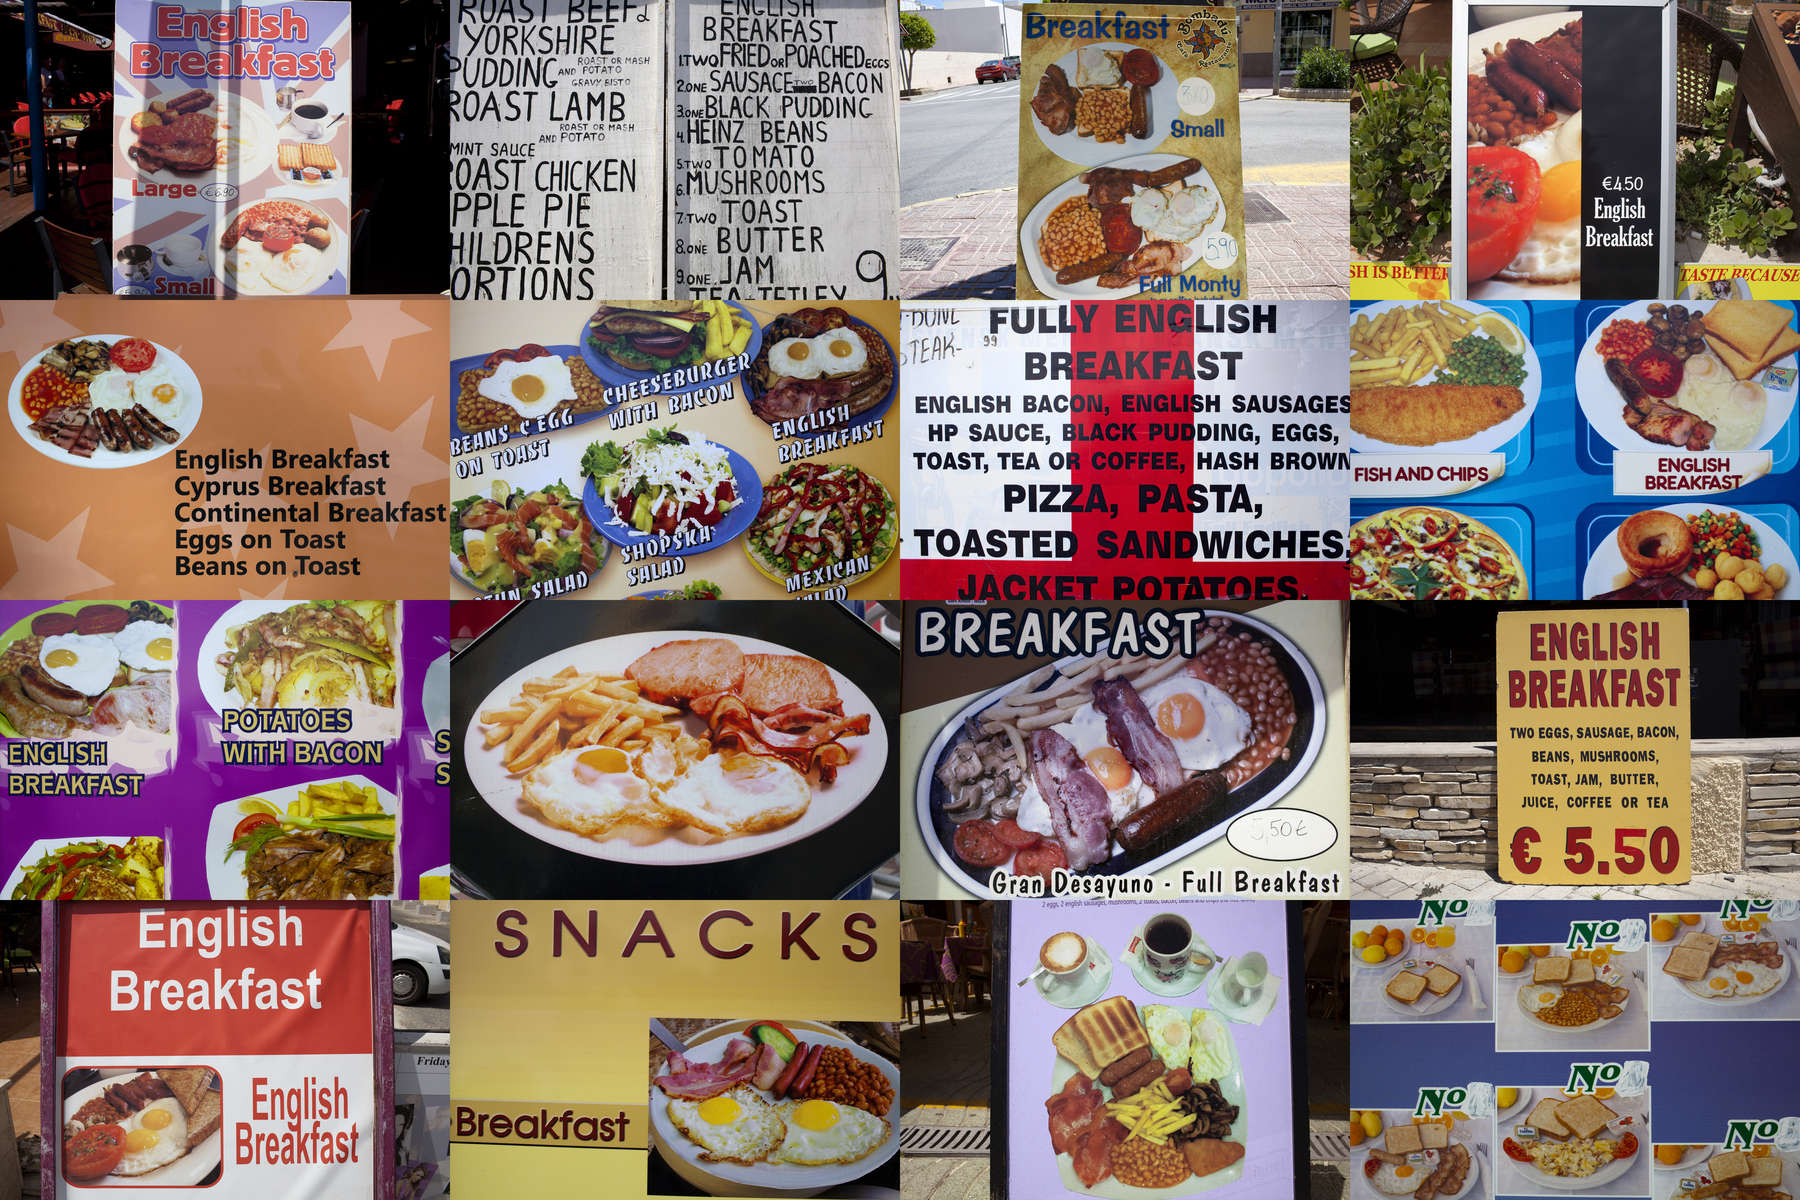 Advertisement boards for the English Breakfast available in: Ayia Napa, Cyprus; Sunny Beach, Bulgaria; San Antonio, Ibiza and Magaluf, Majorca.